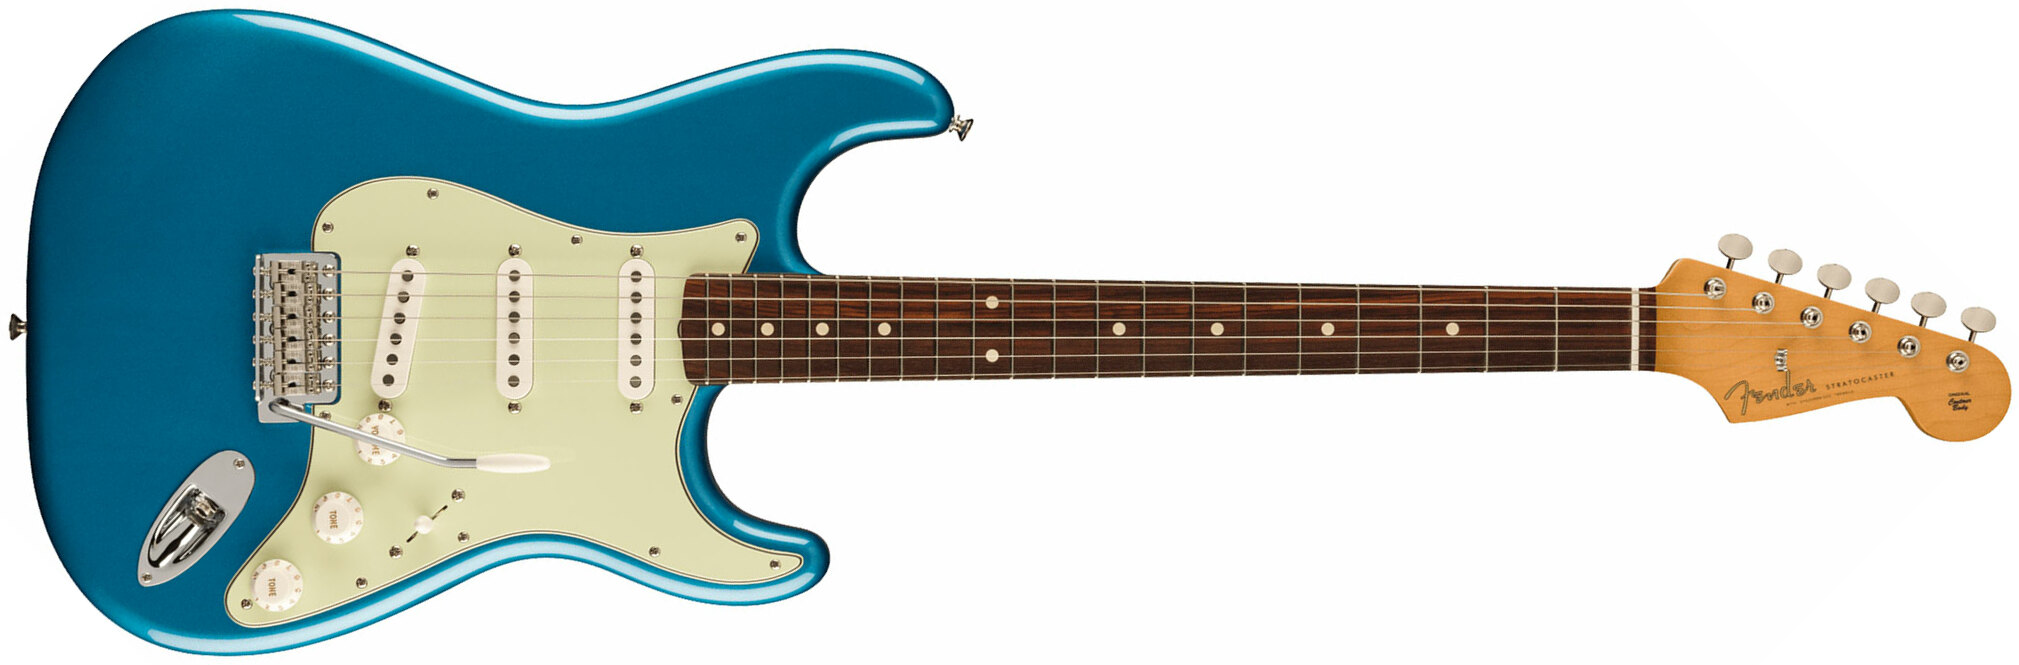 Fender Strat 60s Vintera 2 Mex 3s Trem Rw - Lake Placid Blue - Str shape electric guitar - Main picture